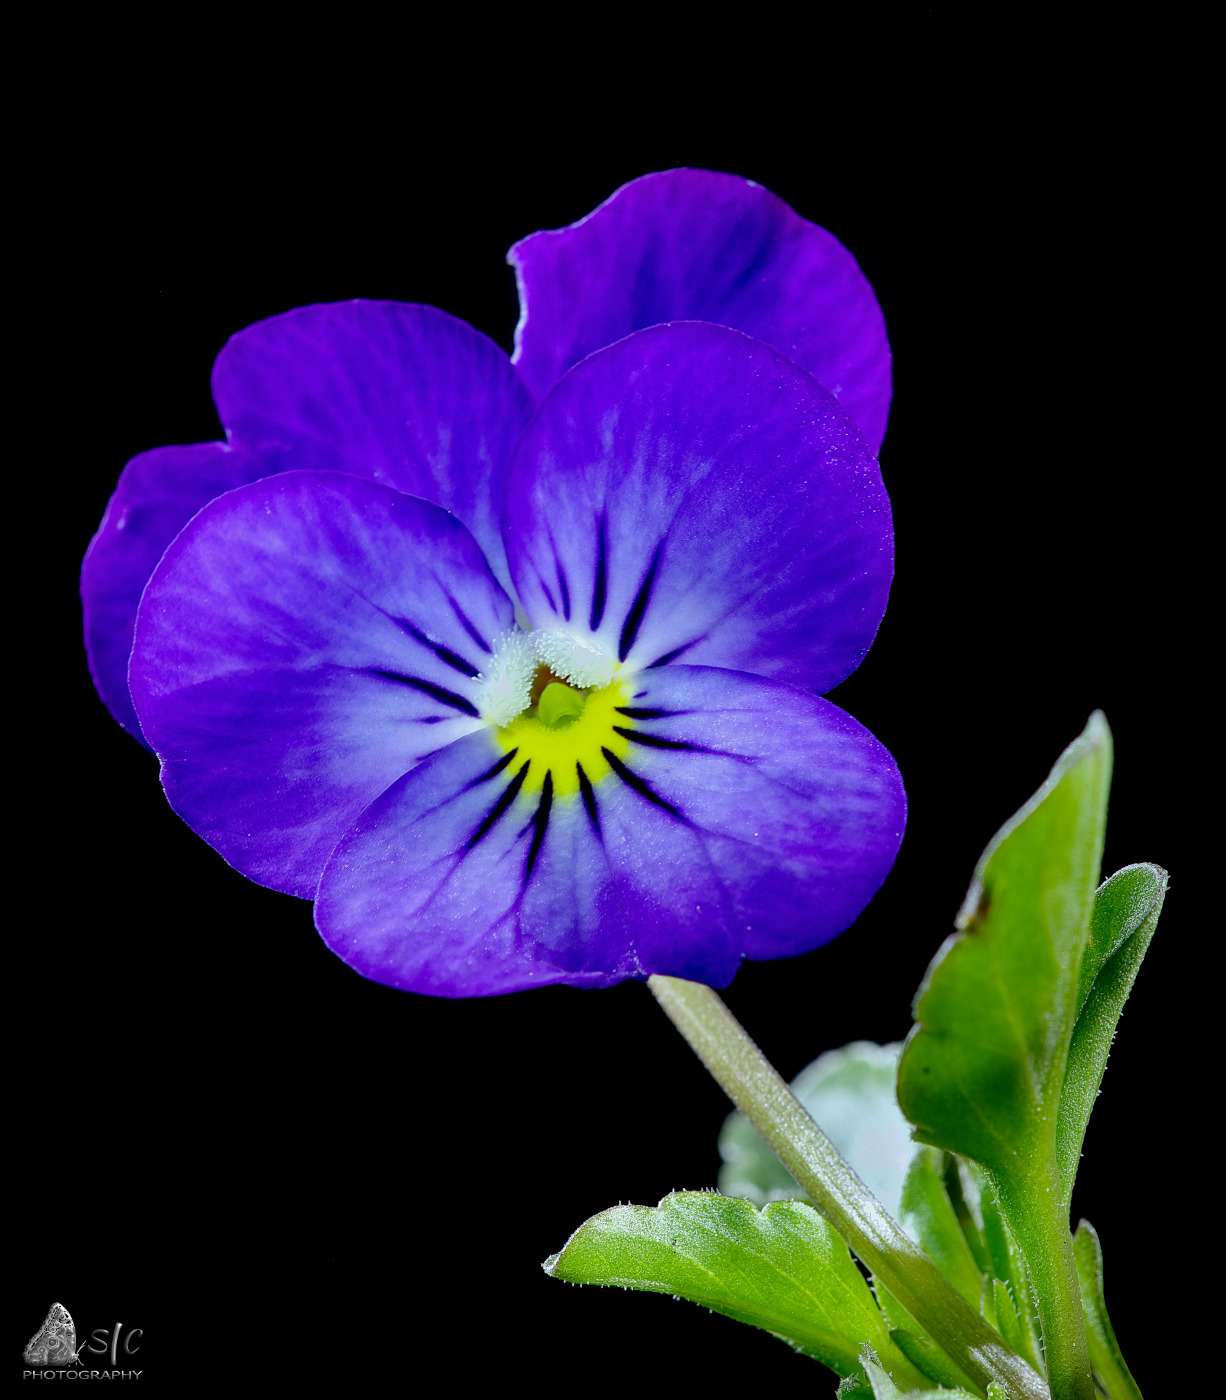 The garden pansy (Viola × wittrockiana)